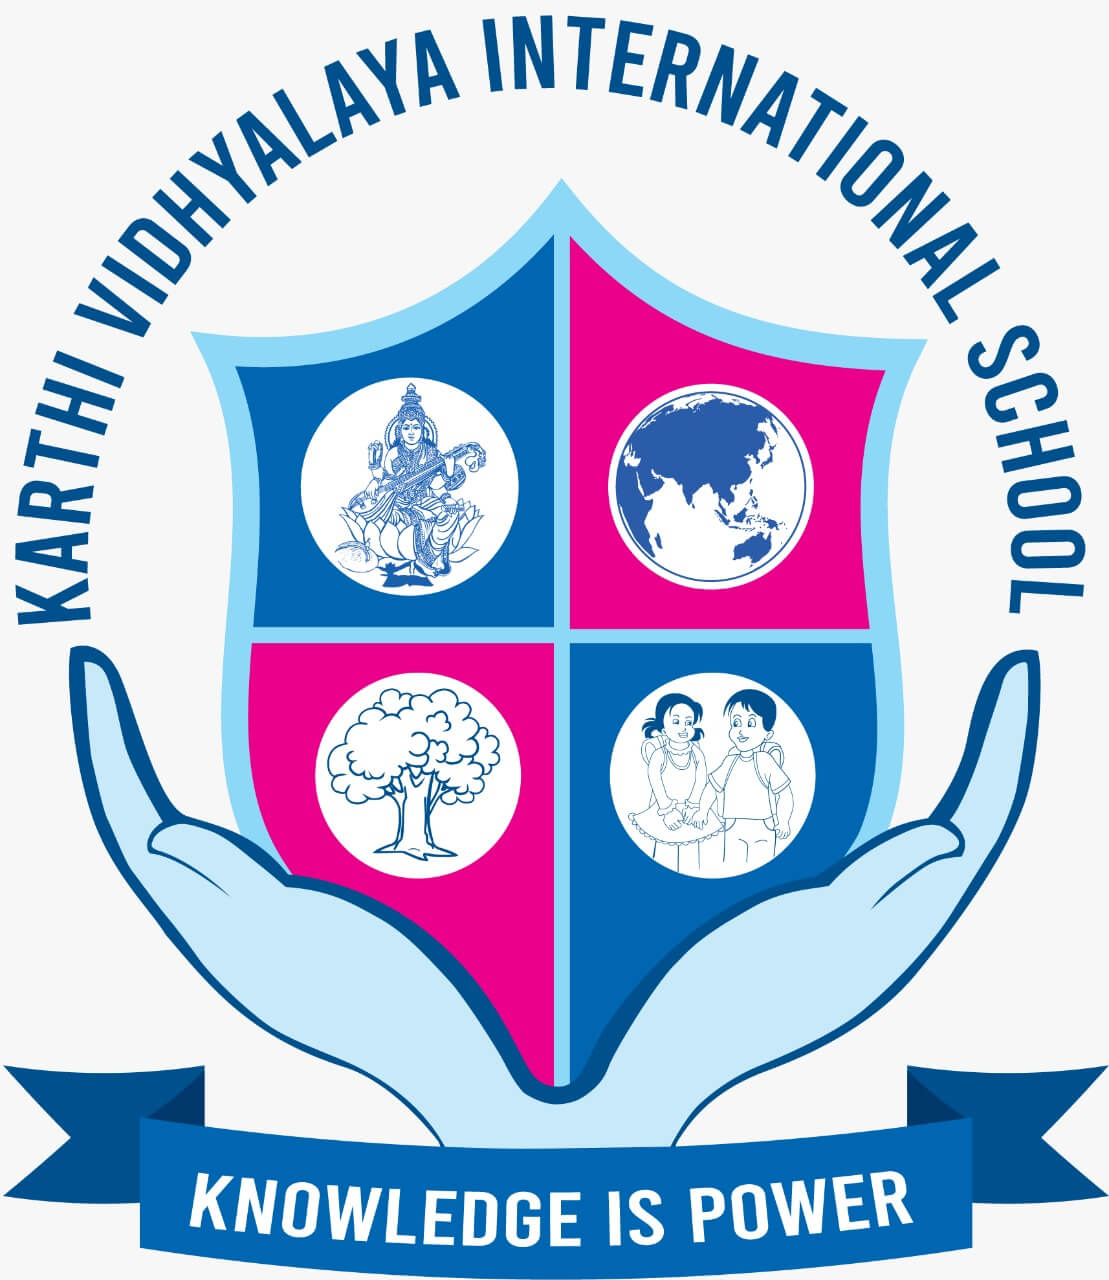 Karthi Vidhyalaya International (ICSE) School